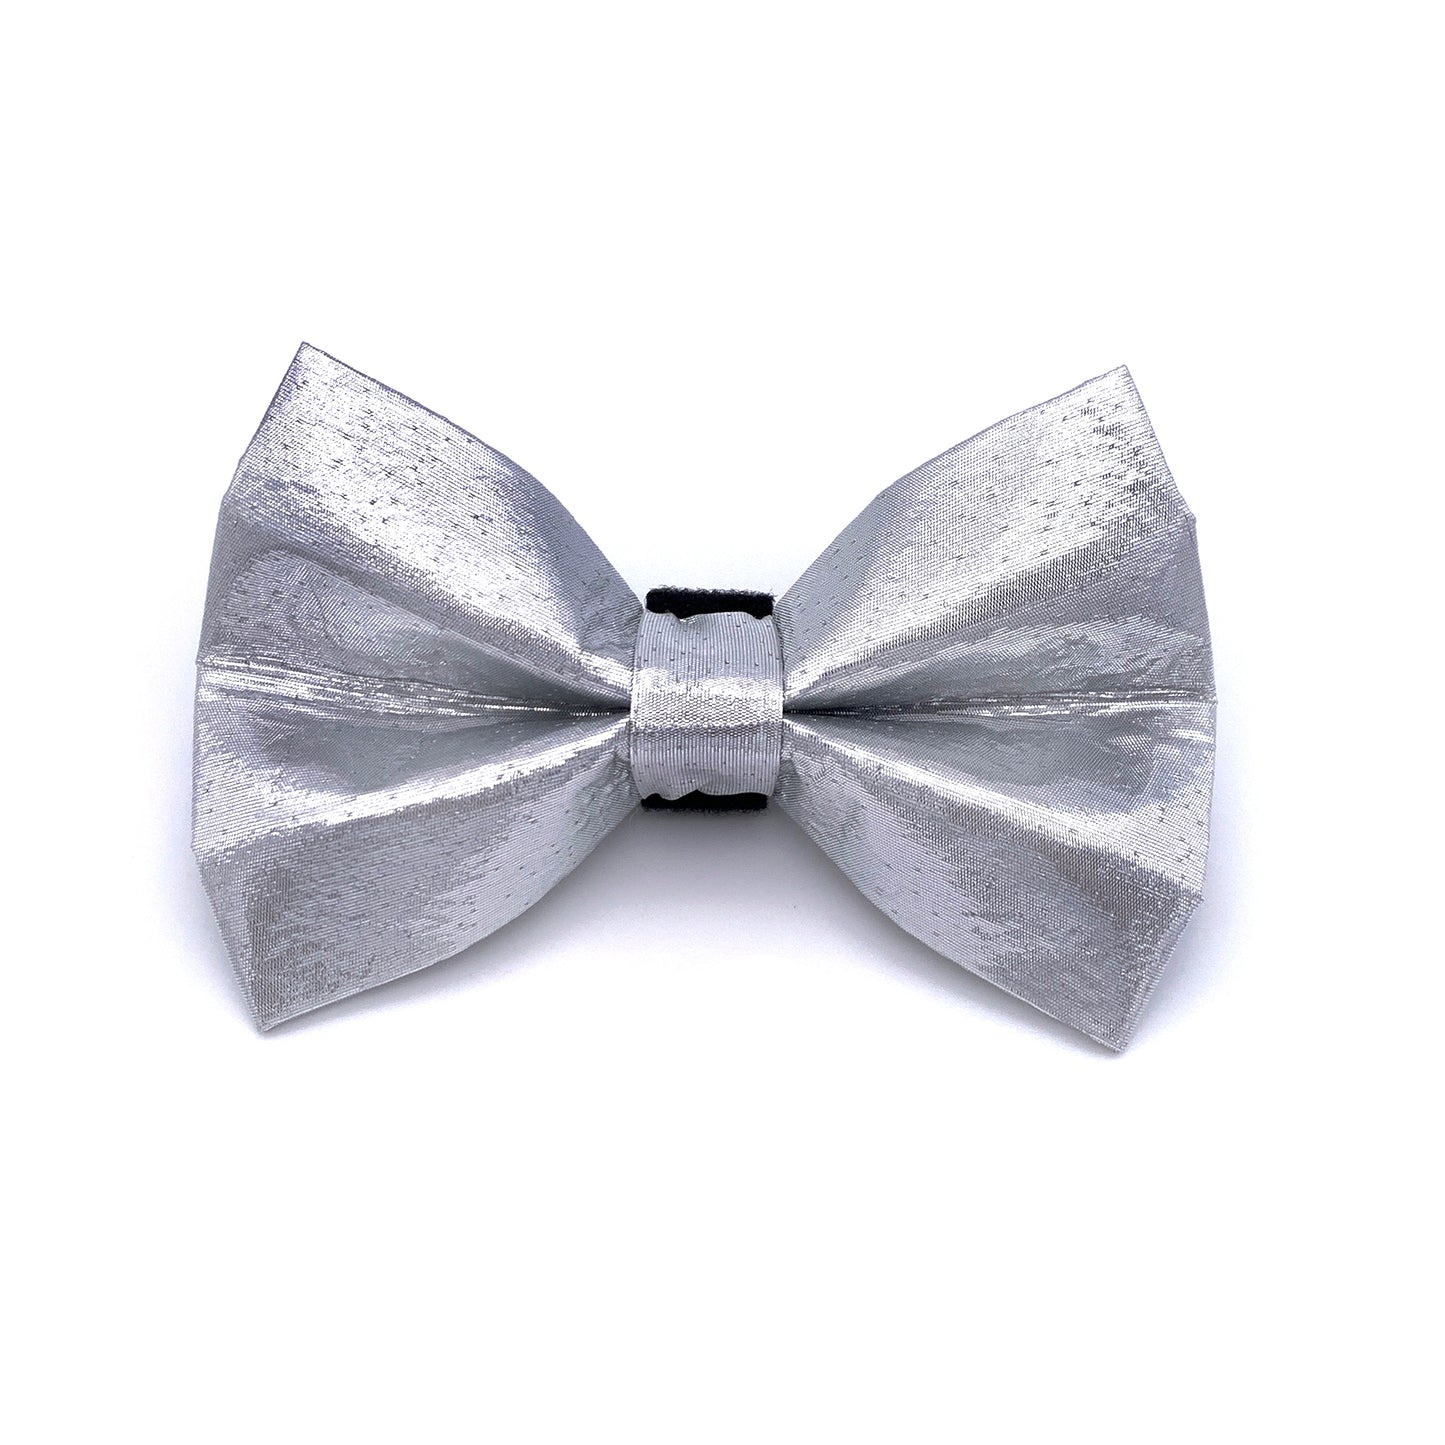 Silver Dog Bow Tie